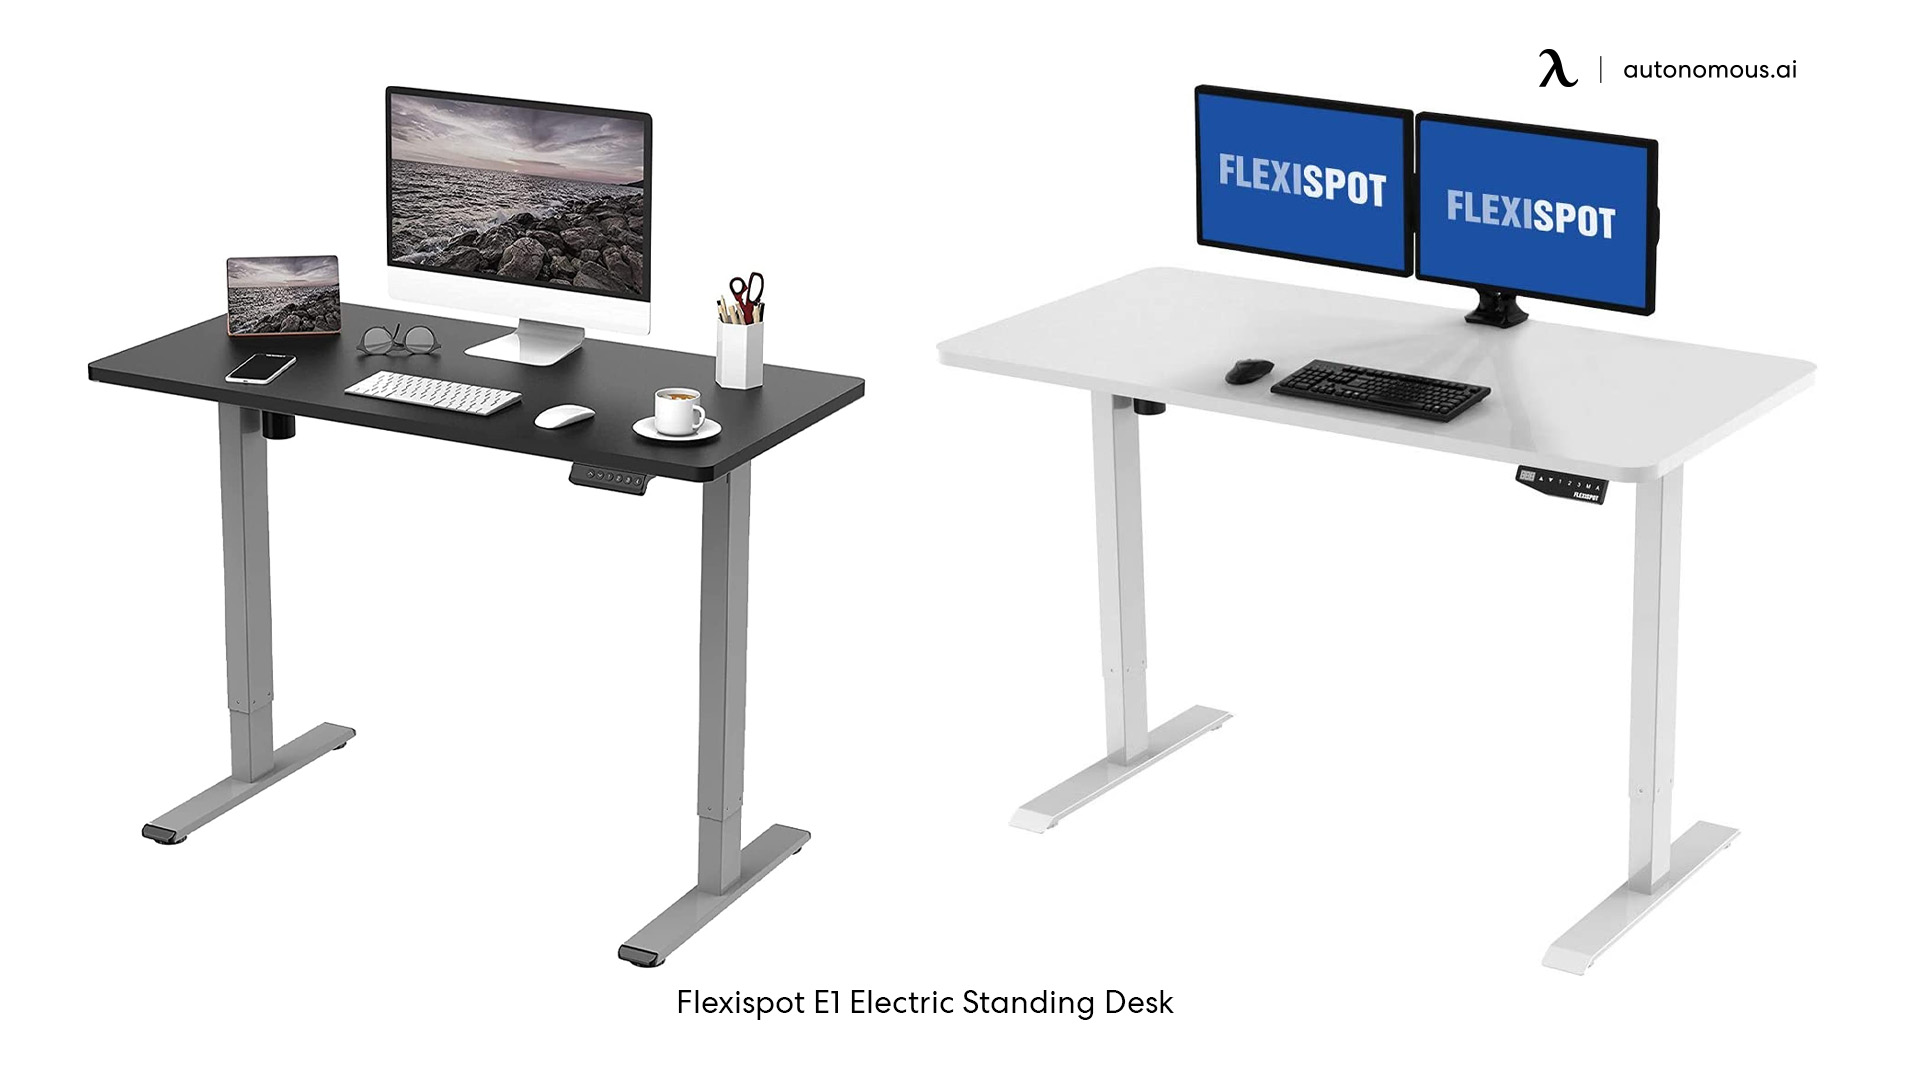 Flexispot E1 Electric Standing Desk